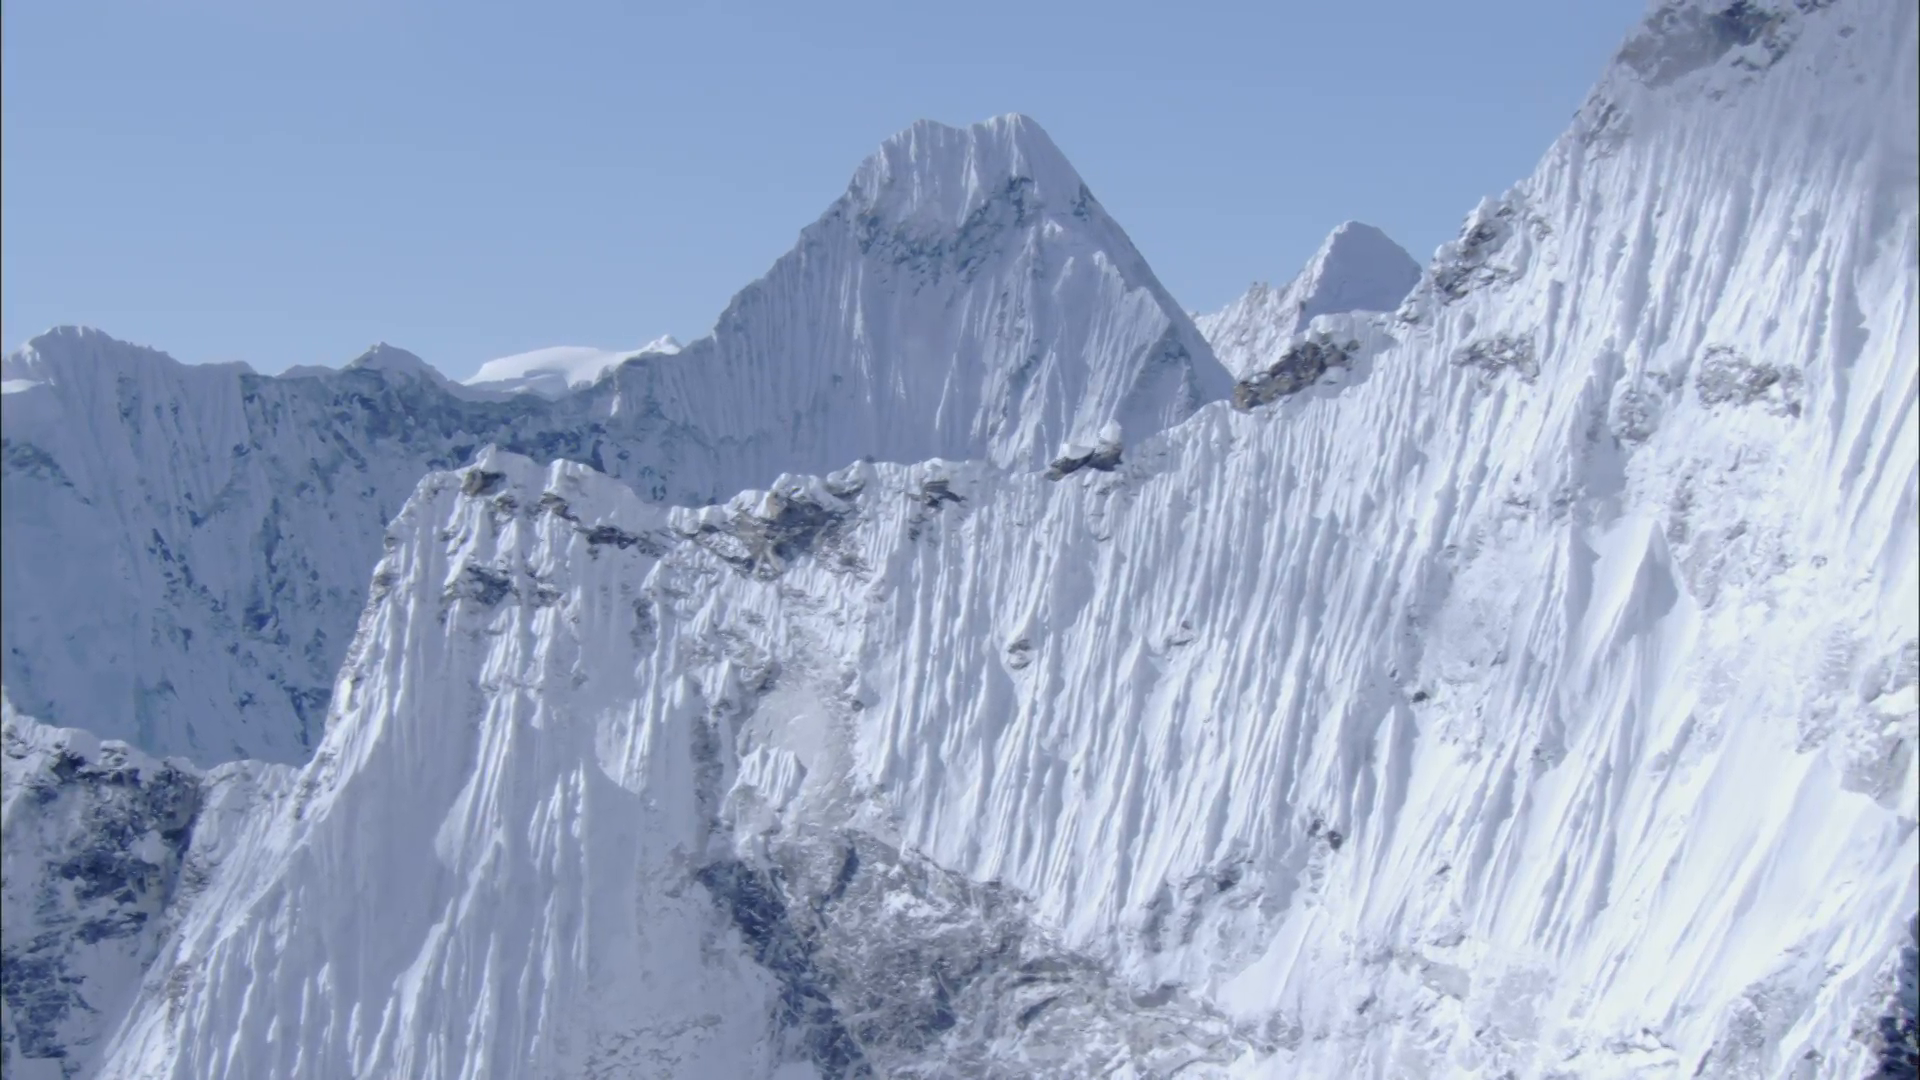 White Snow Himalaya Mountains. Steep mountain ridges covered in ...